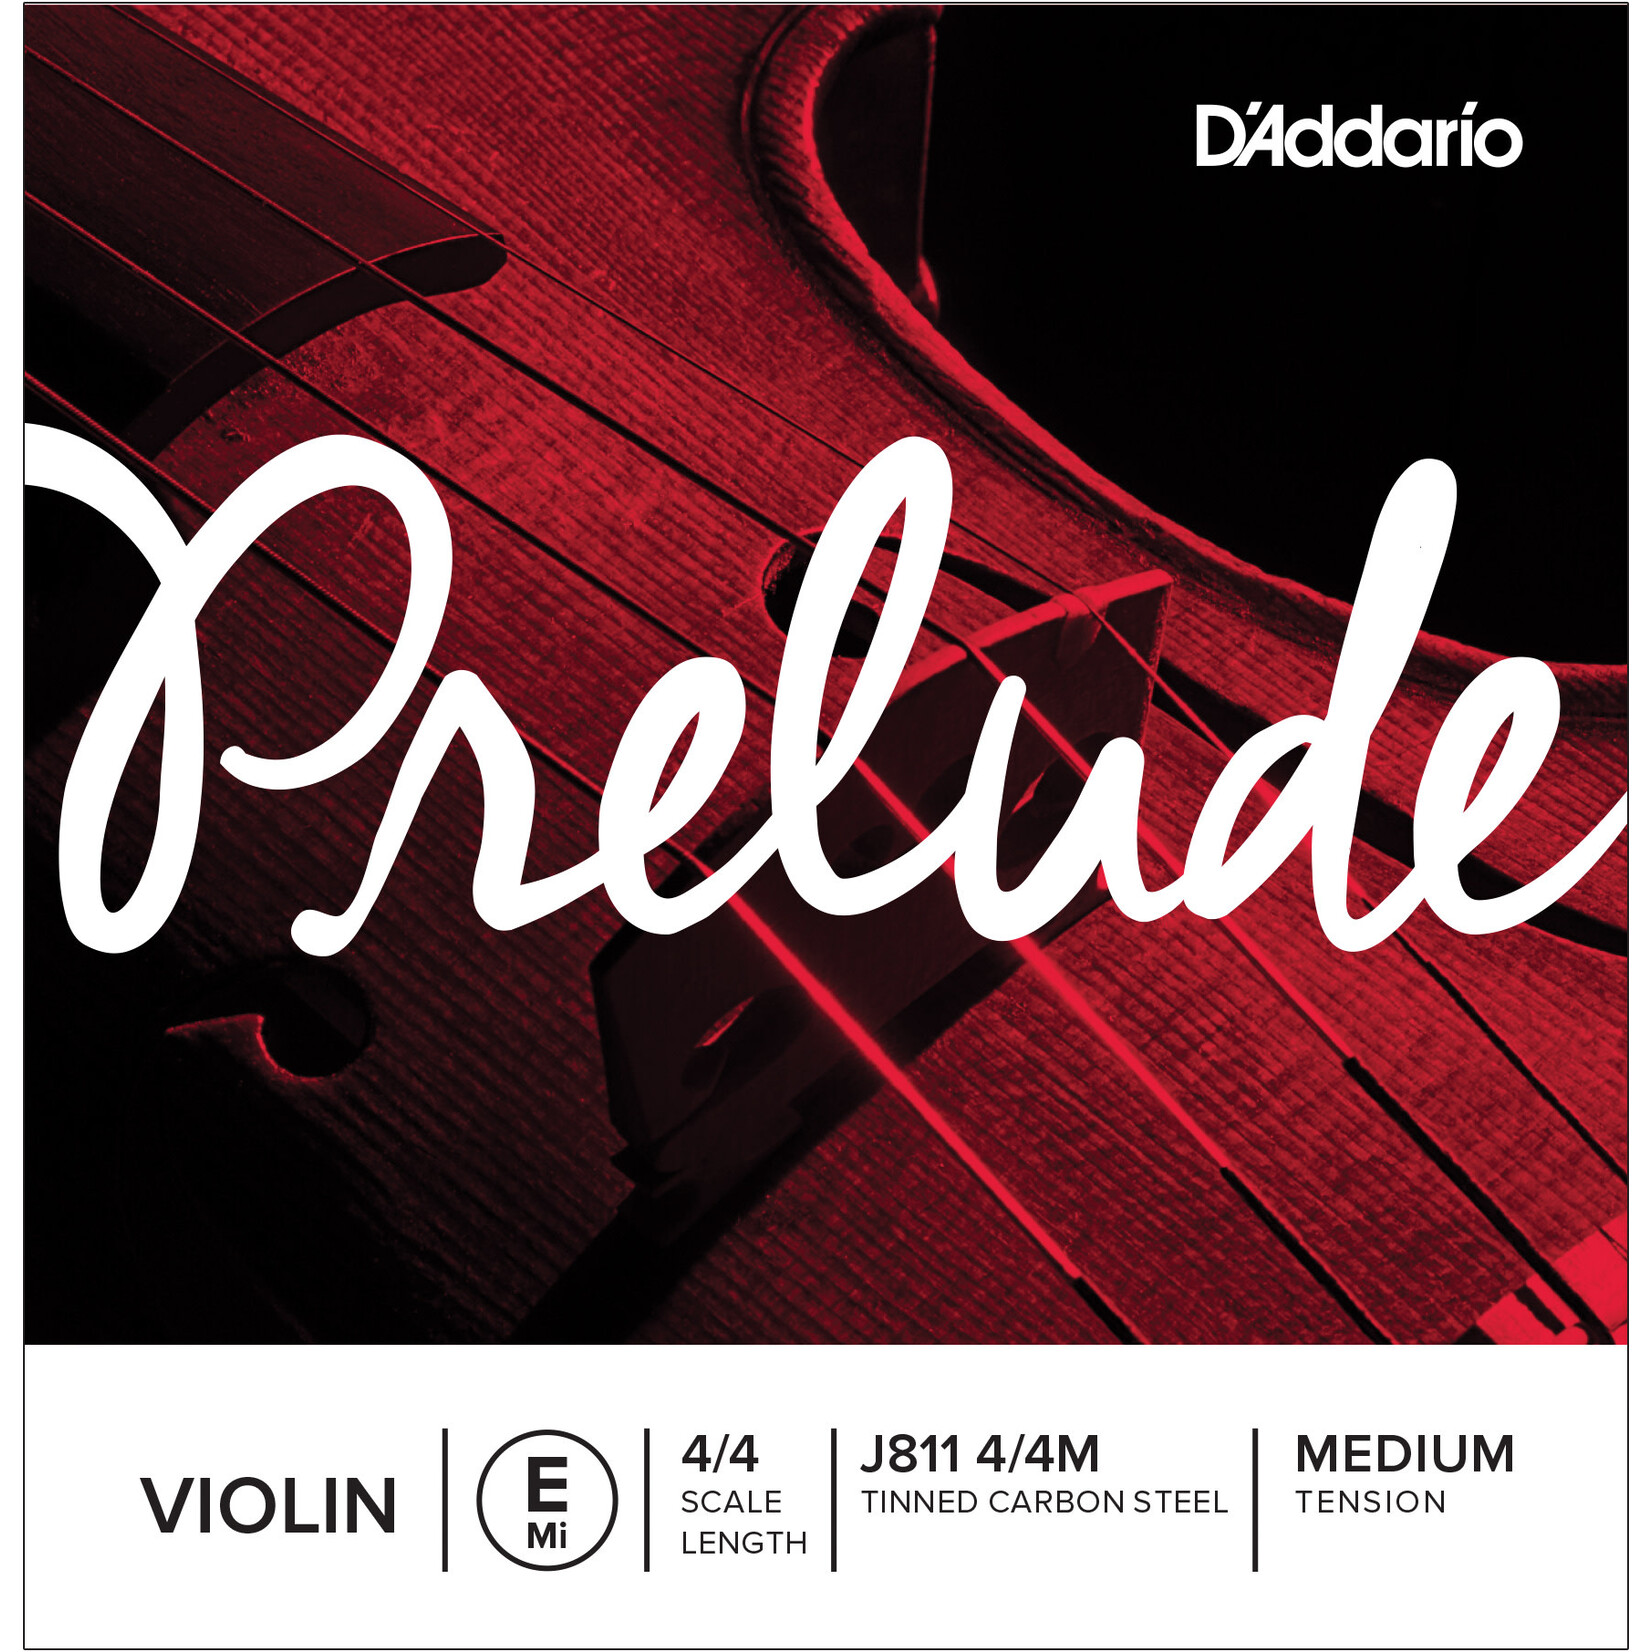 D'Addario D'Addario Prelude Violin E 4/4 Scale Medium Tension *Single String